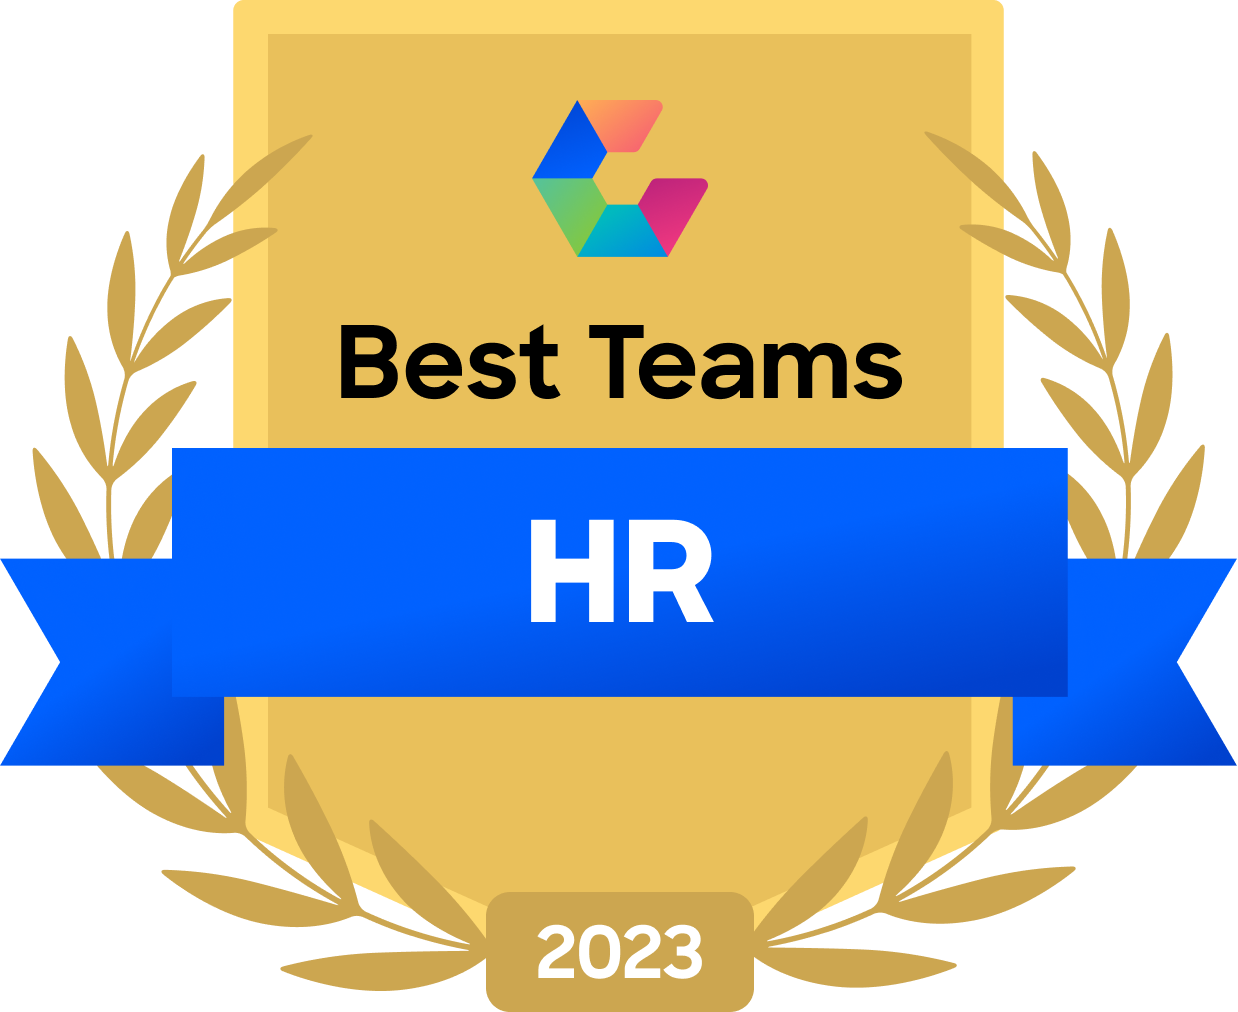 Best Teams Award for HR 2023 Smartsheet